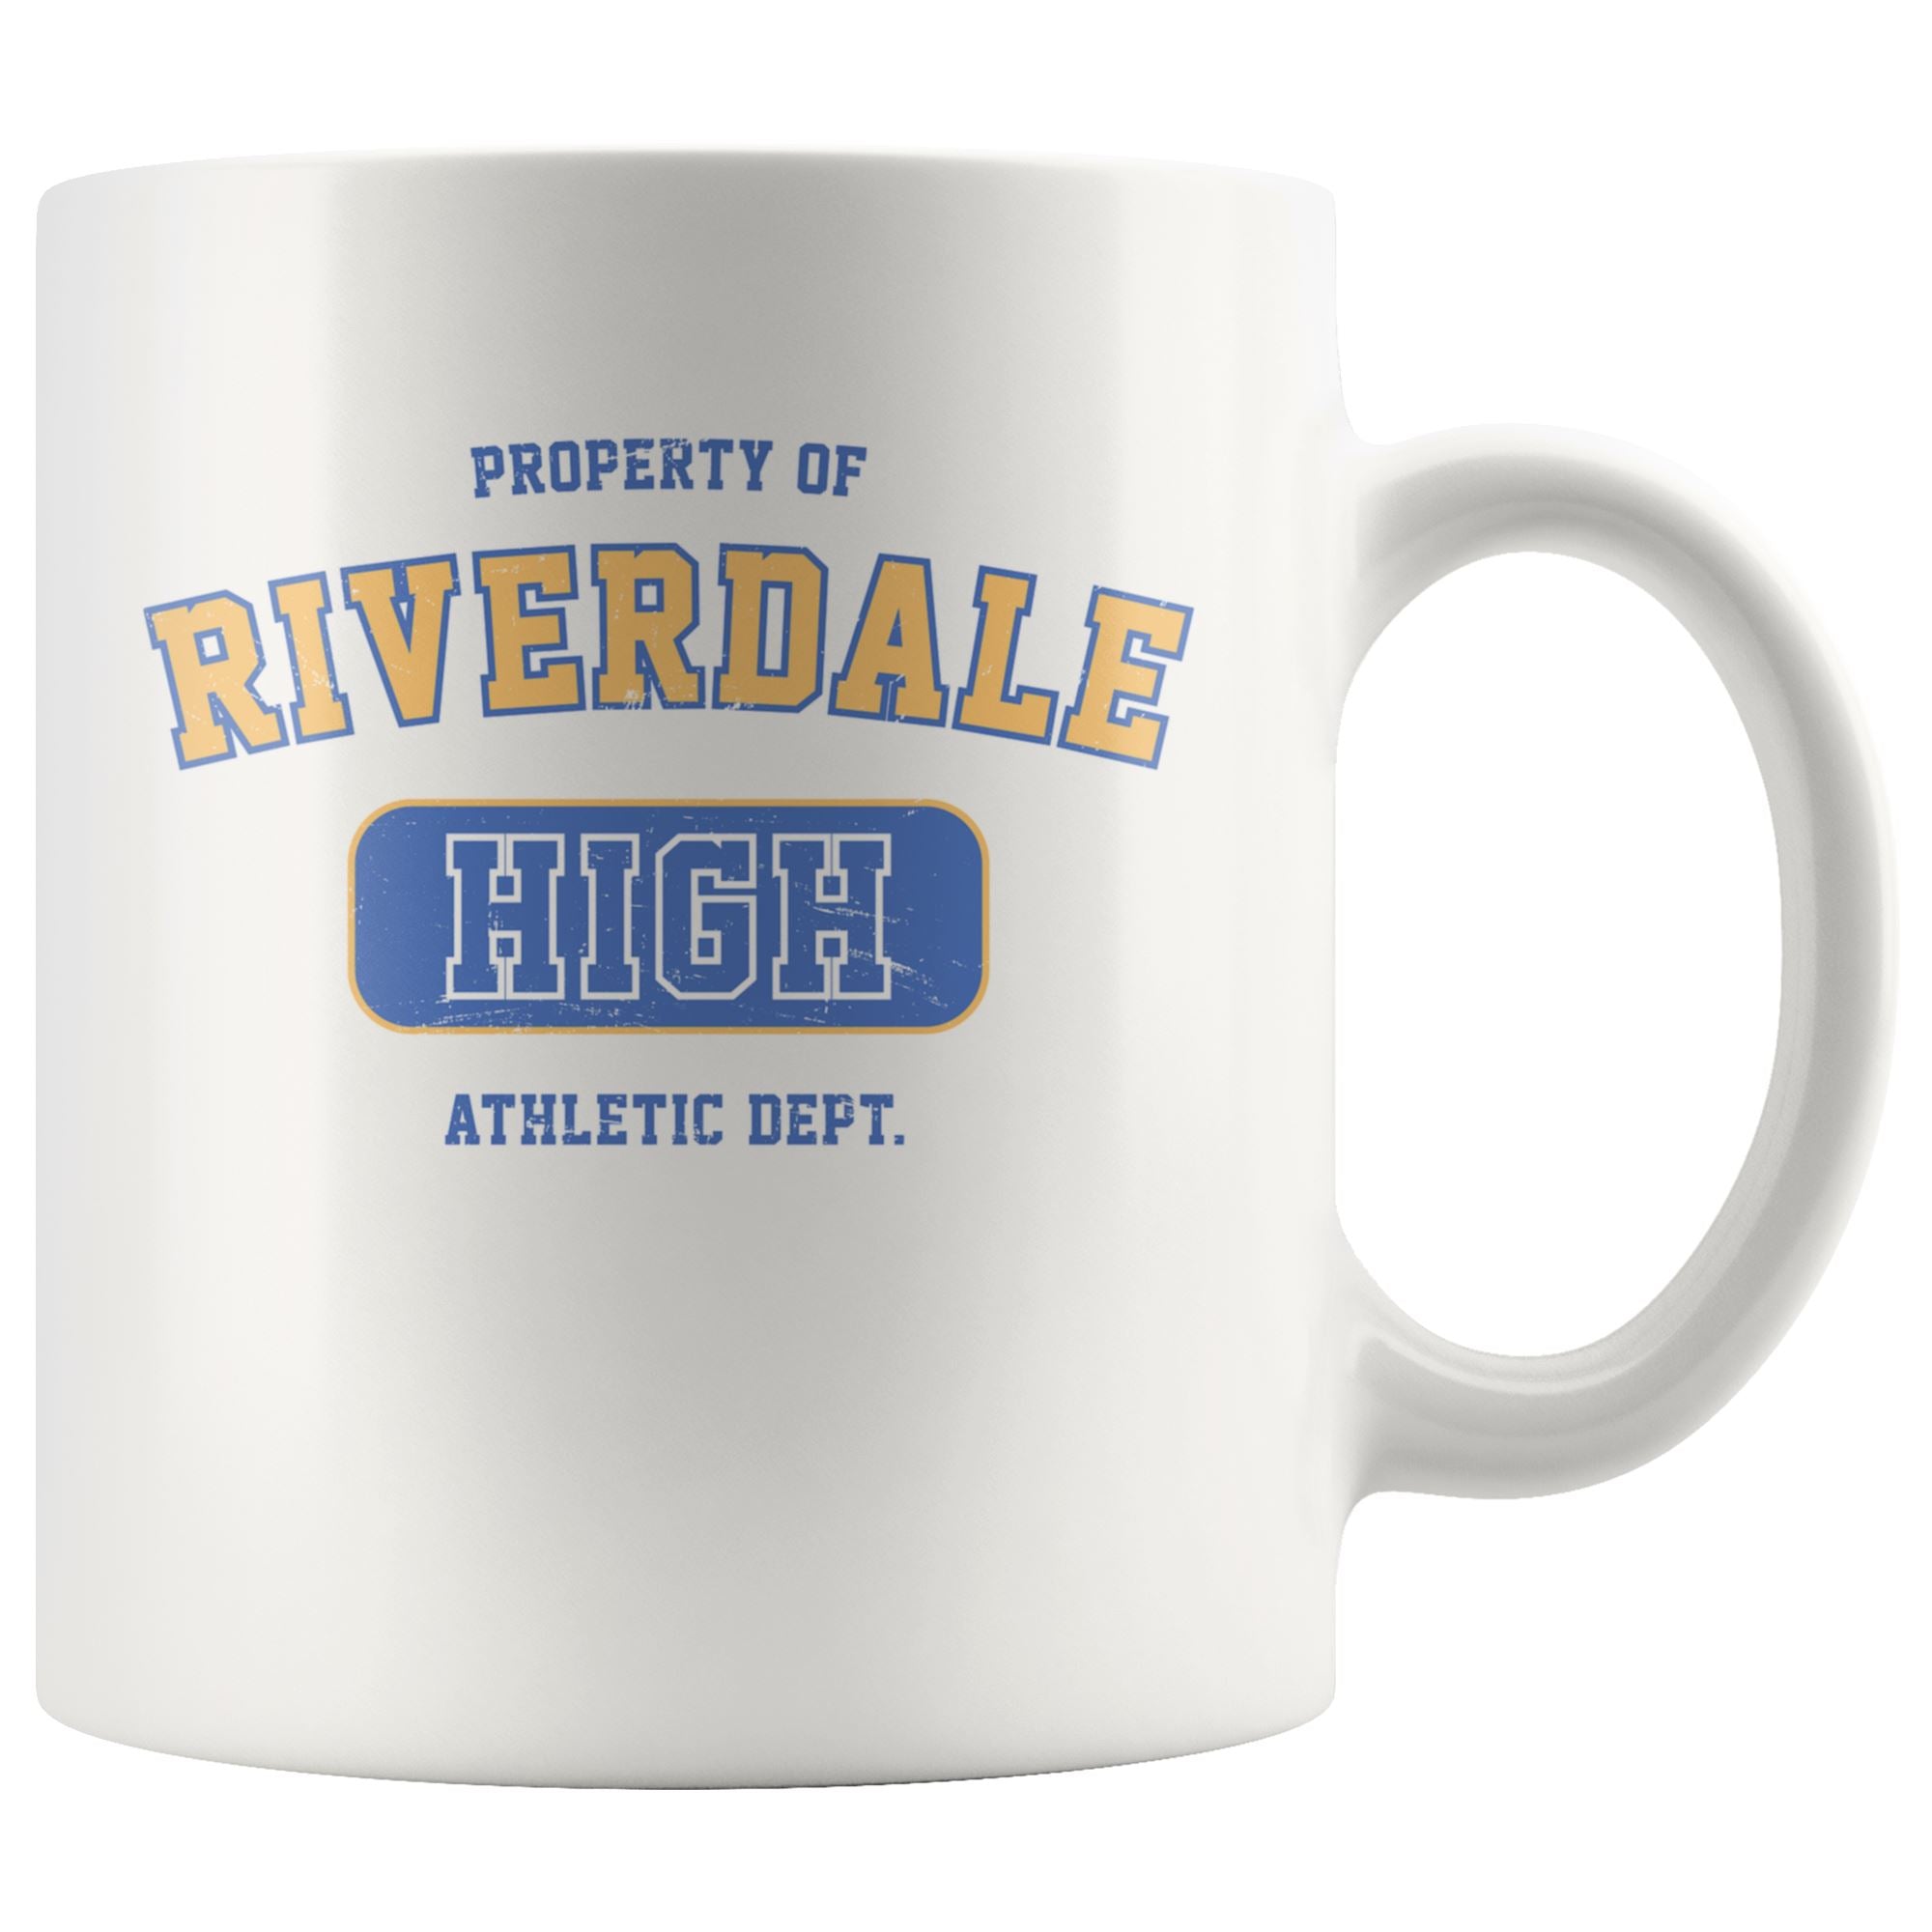 Riverdale High Drinkware teelaunch 11oz Mug 